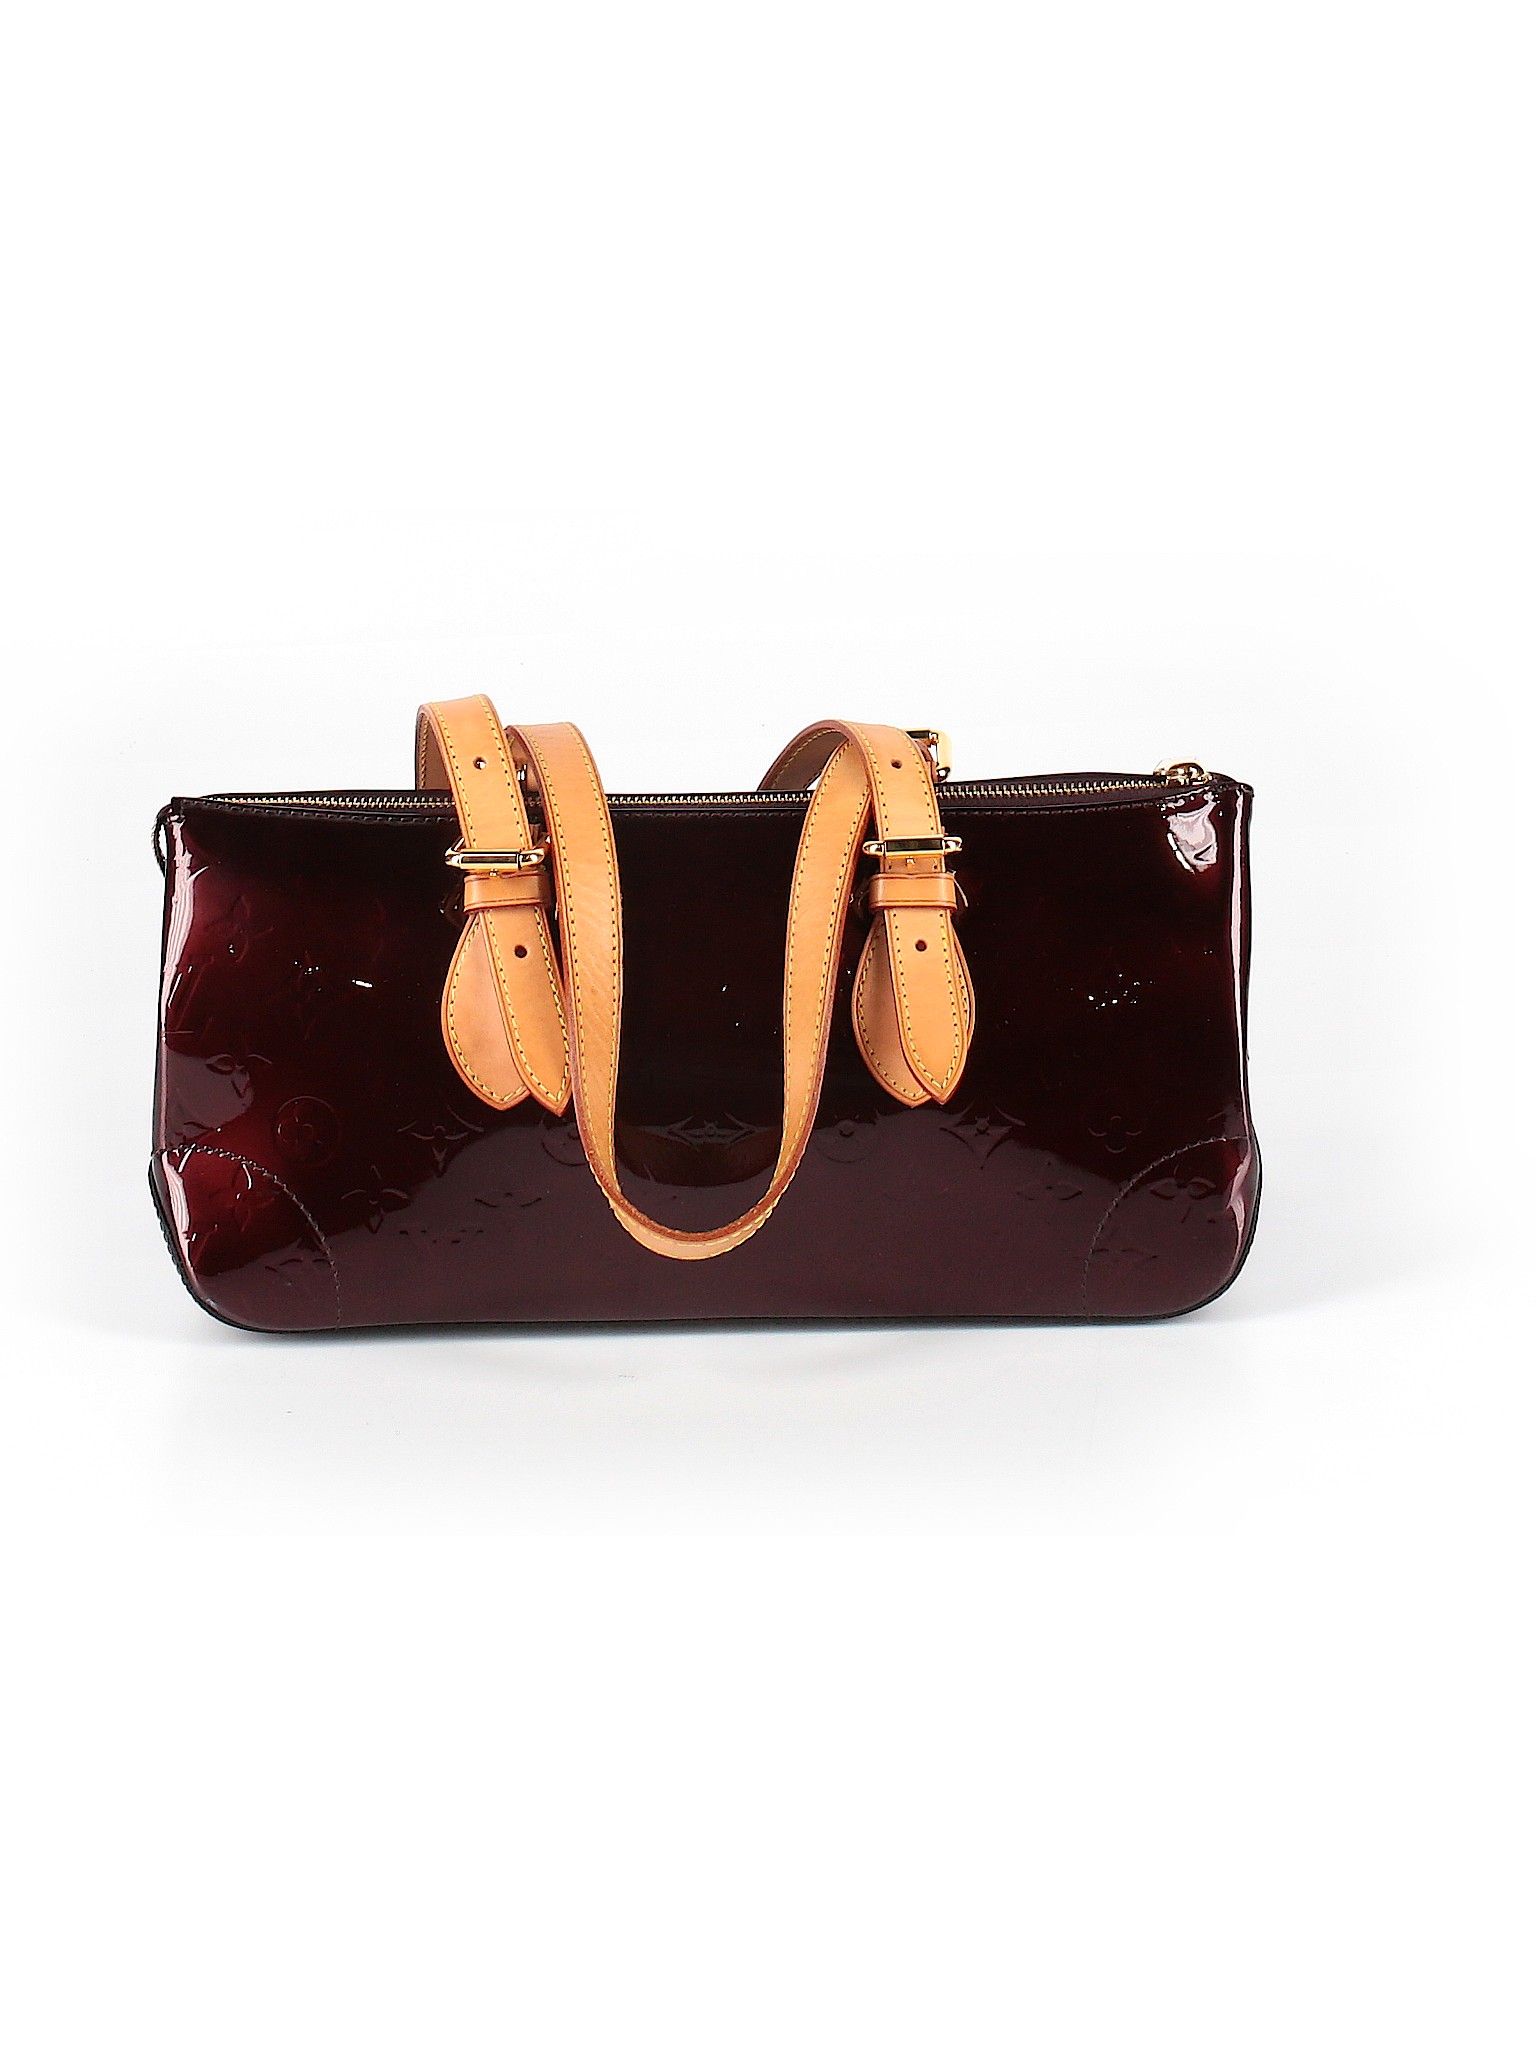 Louis Vuitton Women Red Leather Satchel One Size | eBay